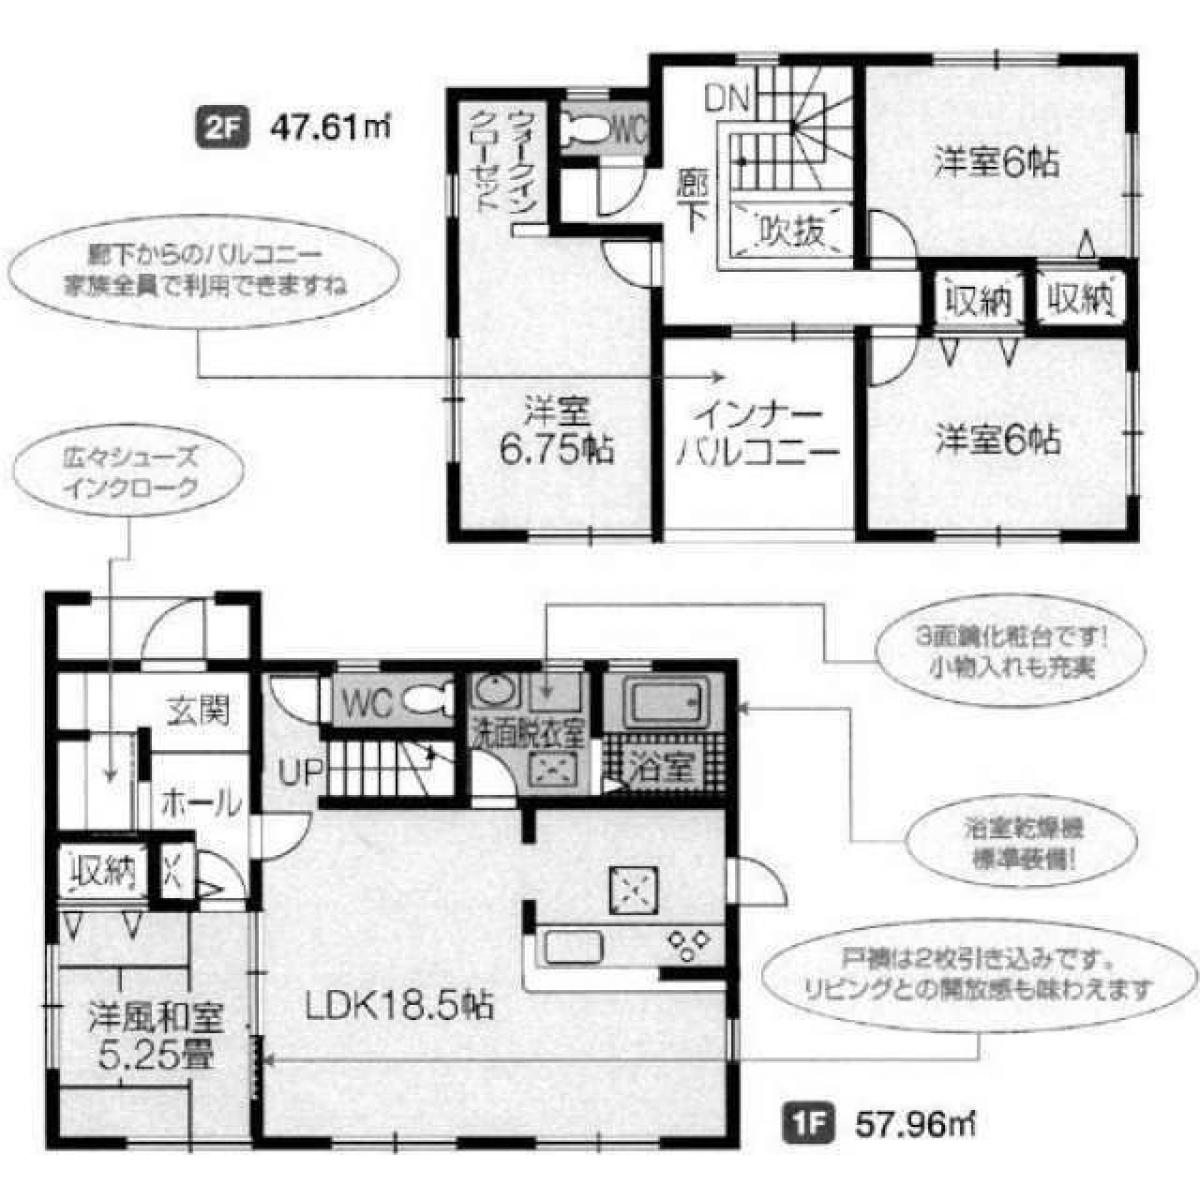 Picture of Home For Sale in Koga Shi, Fukuoka, Japan